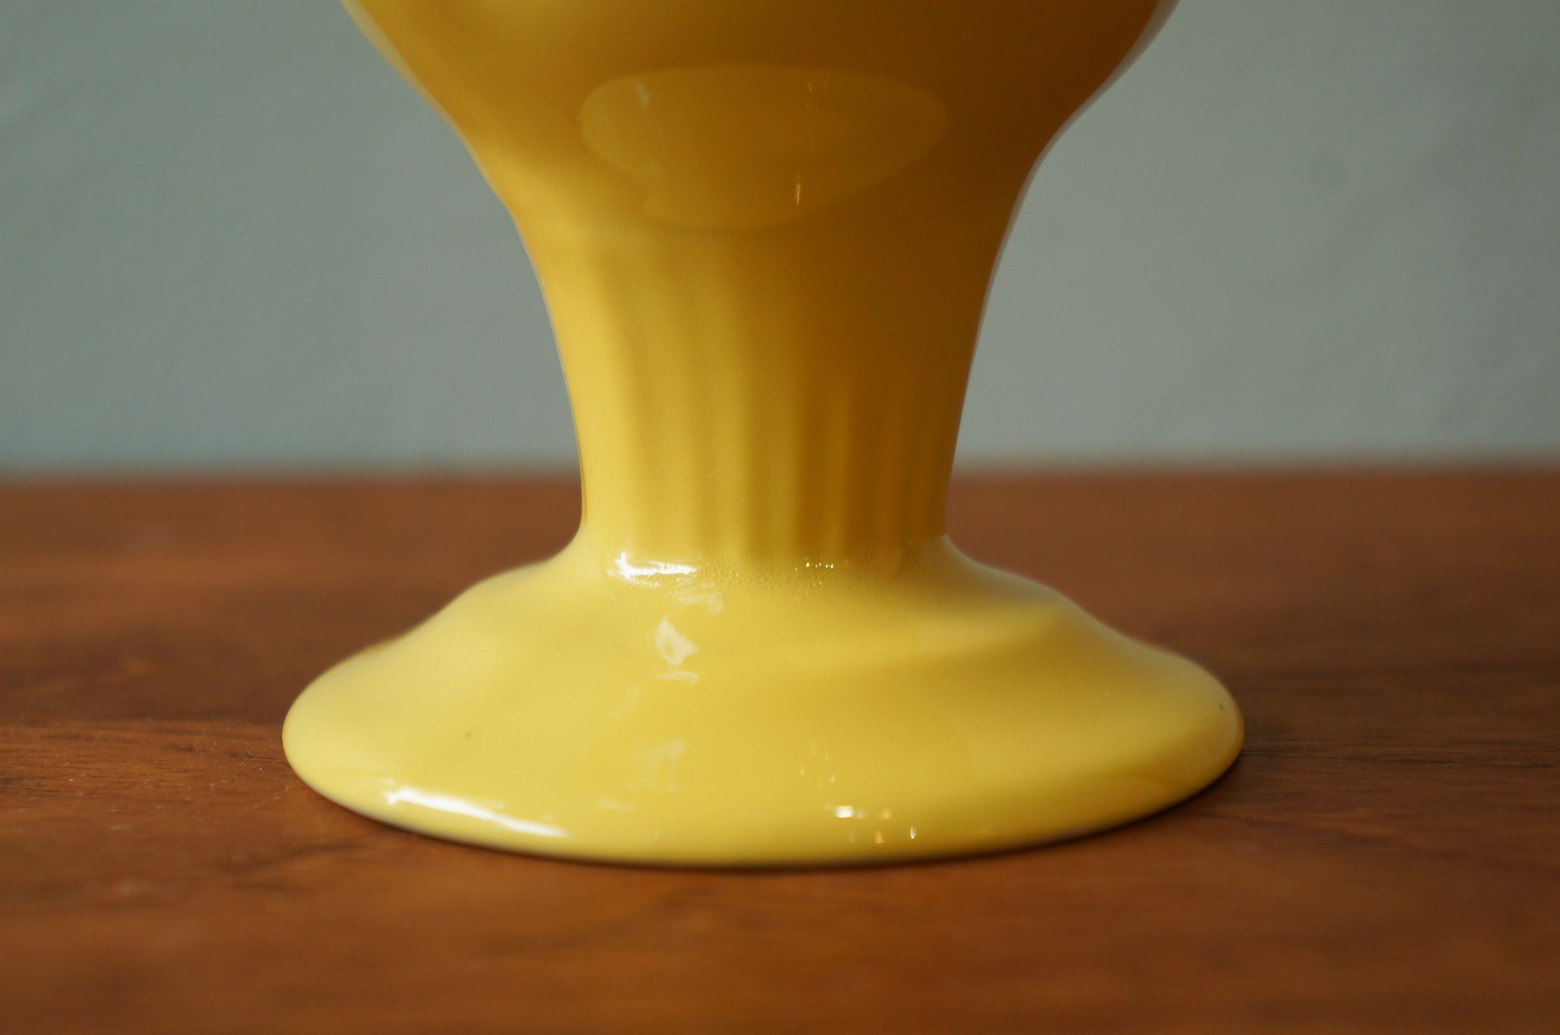 US Vintage Shenango Pedestal Mug Cup/アメリカヴィンテージ シェナンゴ マグカップ 陶器 食器 ミッドセンチュリー レトロ 1